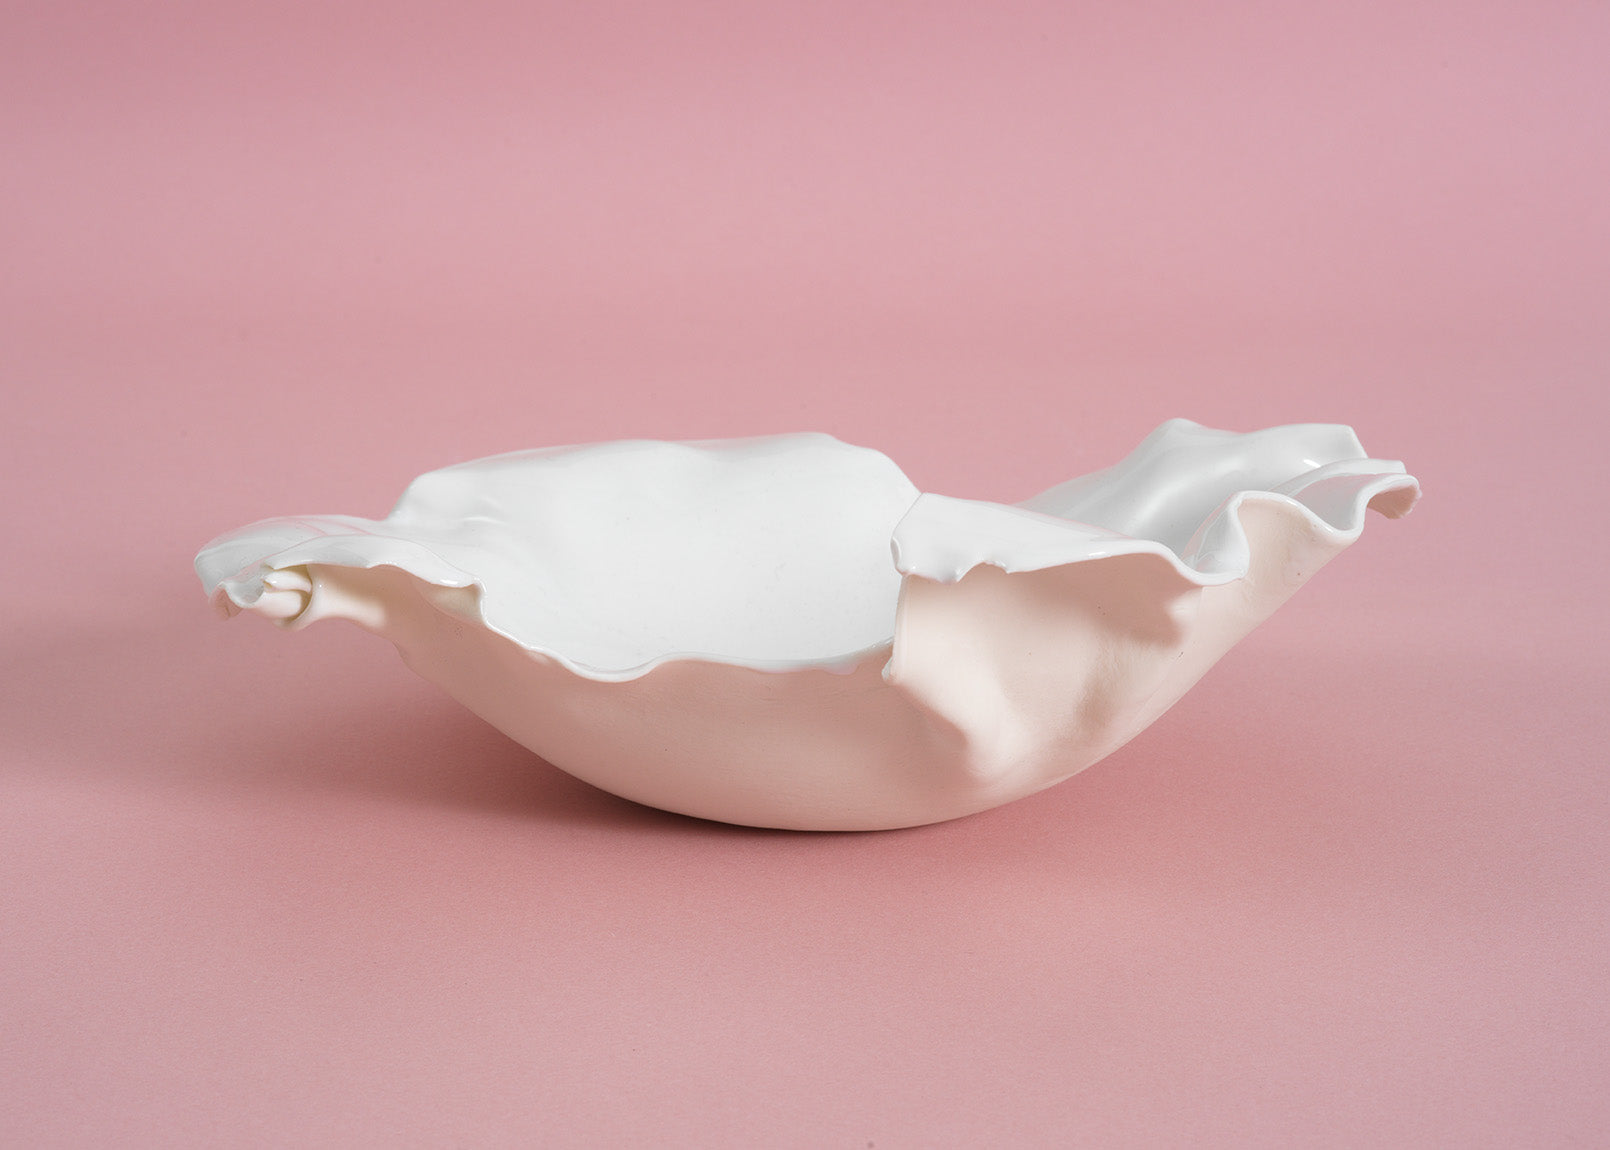 Christine Roland, ‘White porcelain petal’, 2019